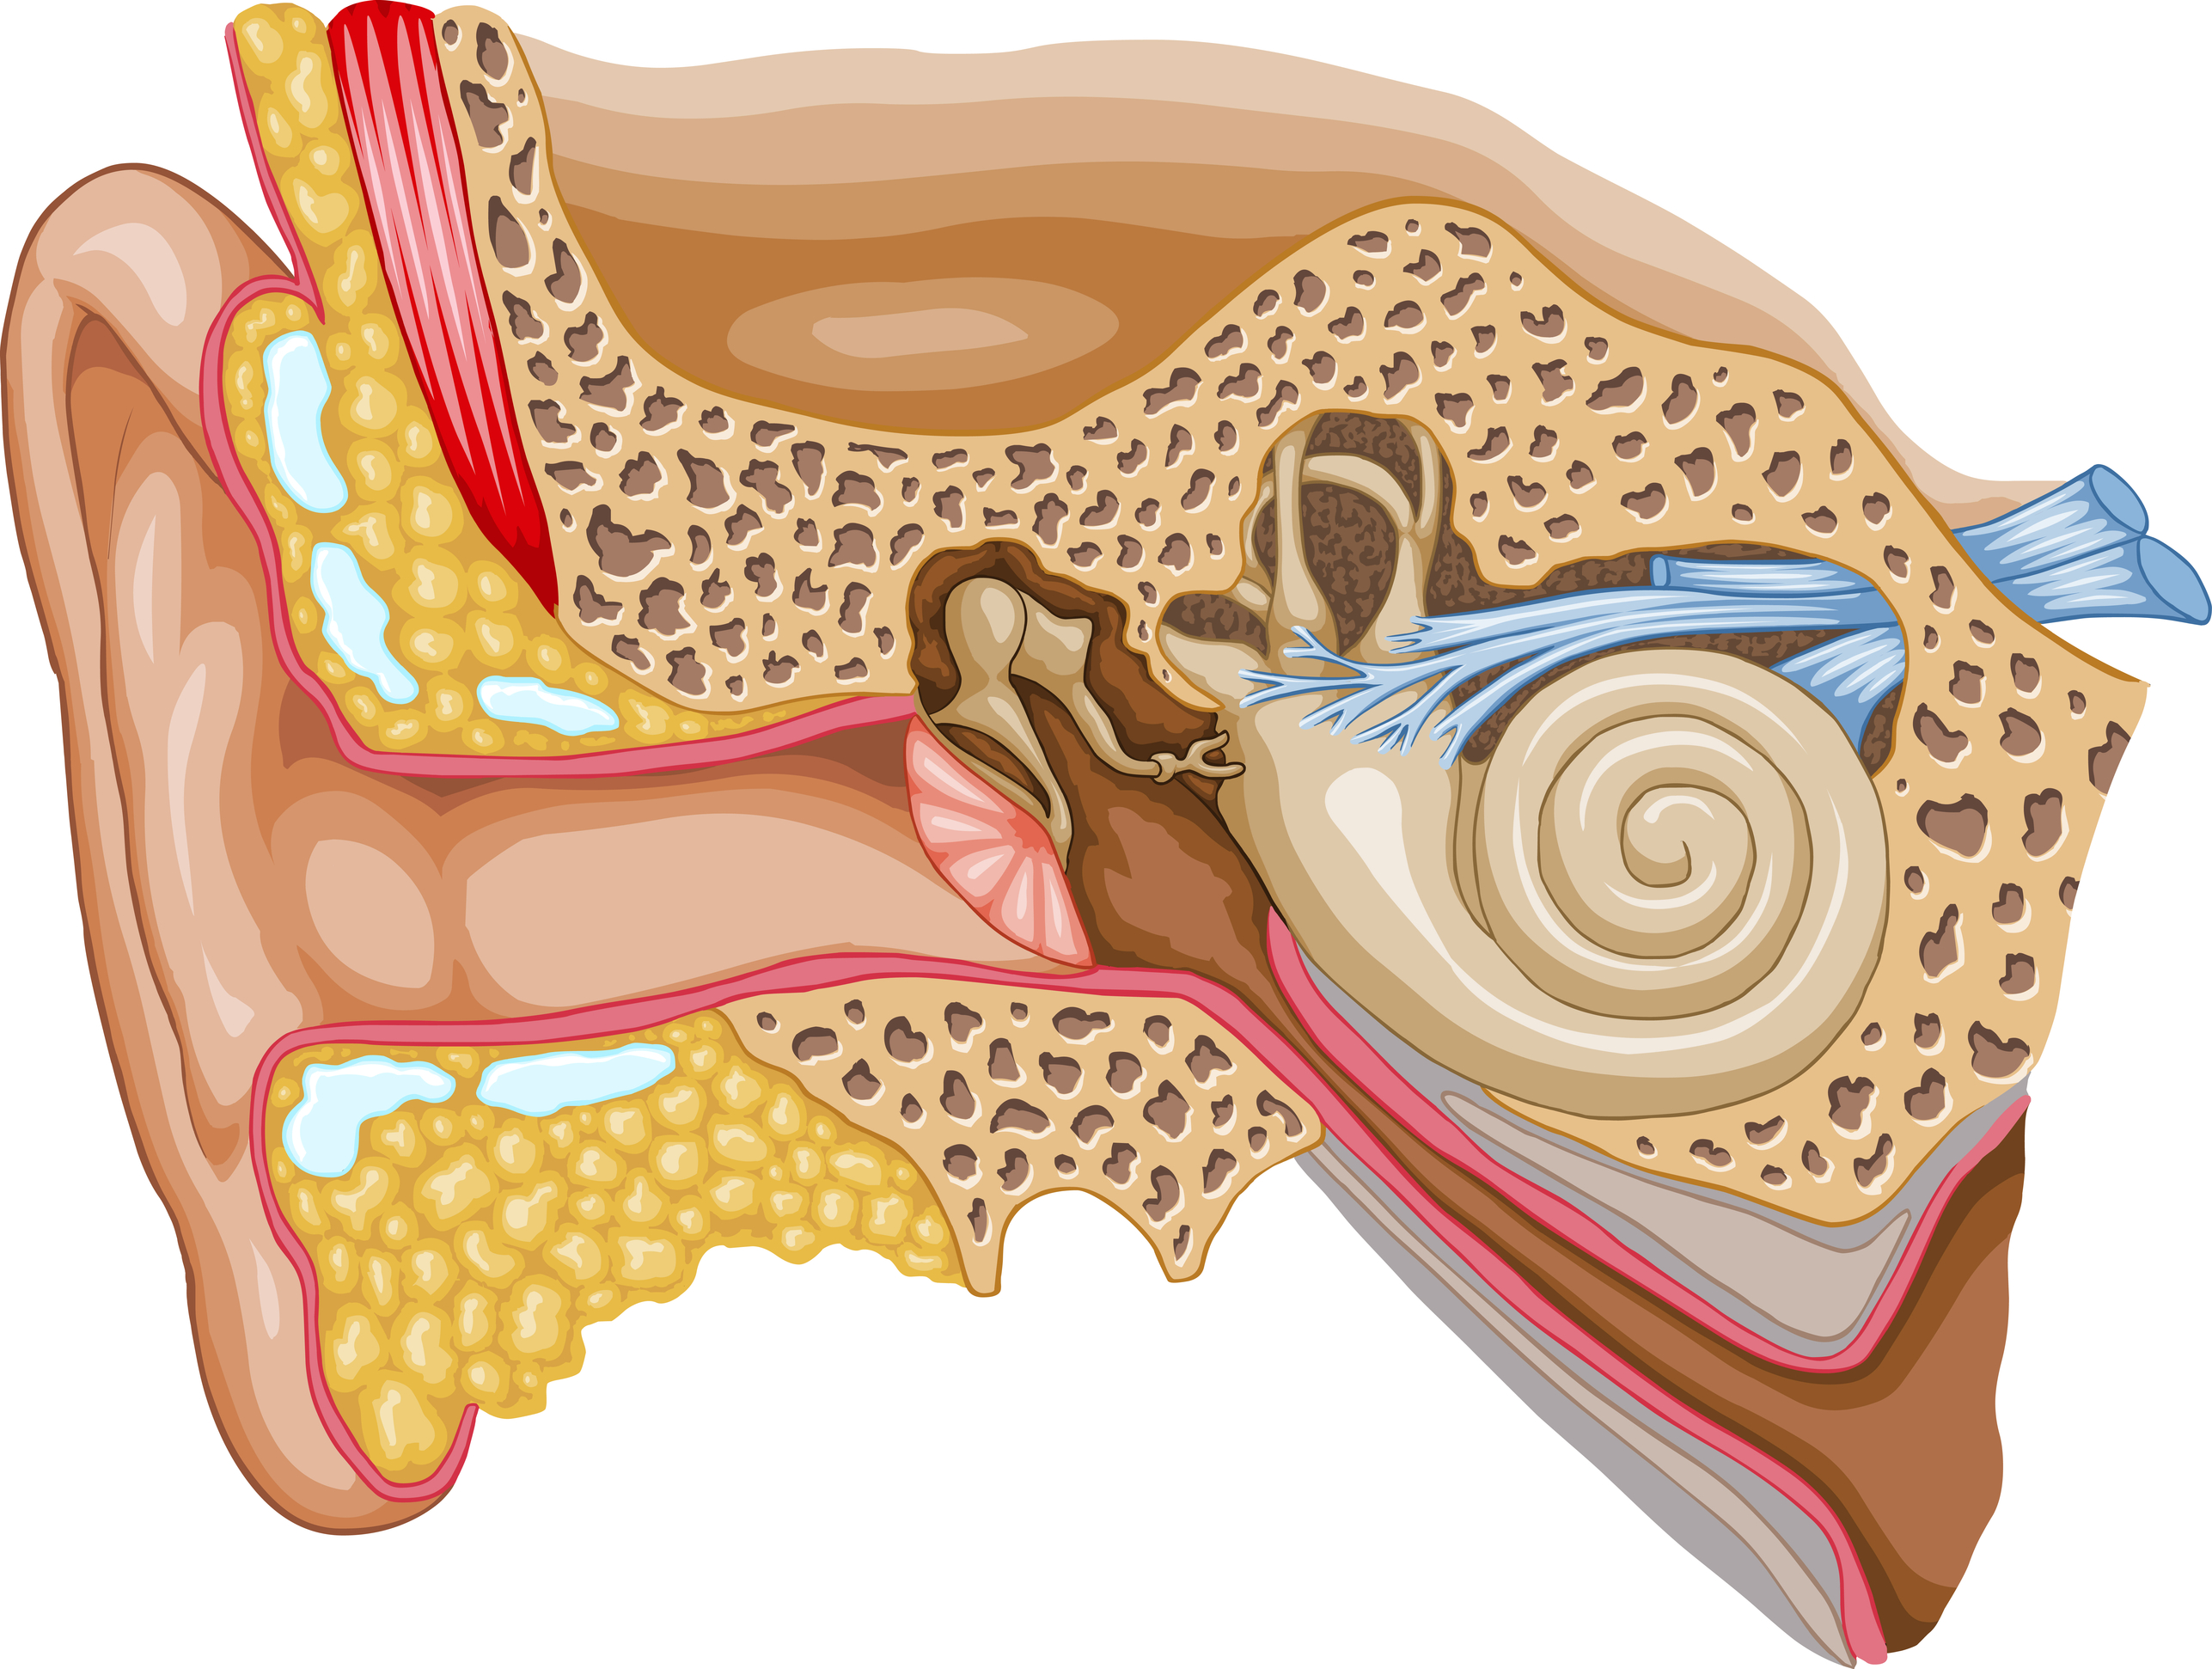 Ear And Sinus Anatomy